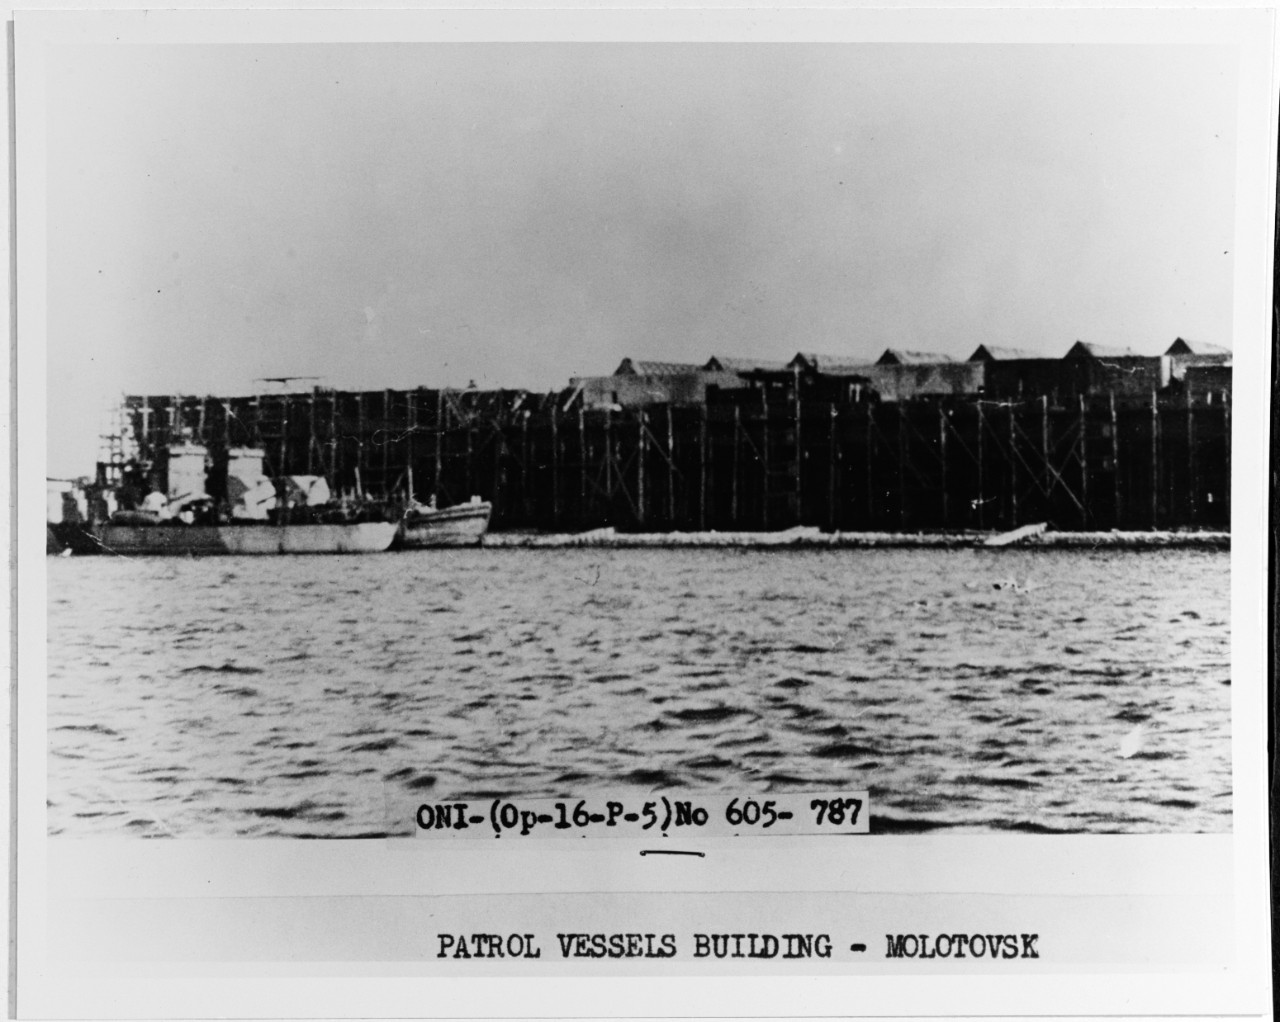 Molotovsk Navy Yard, U.S.S.R.